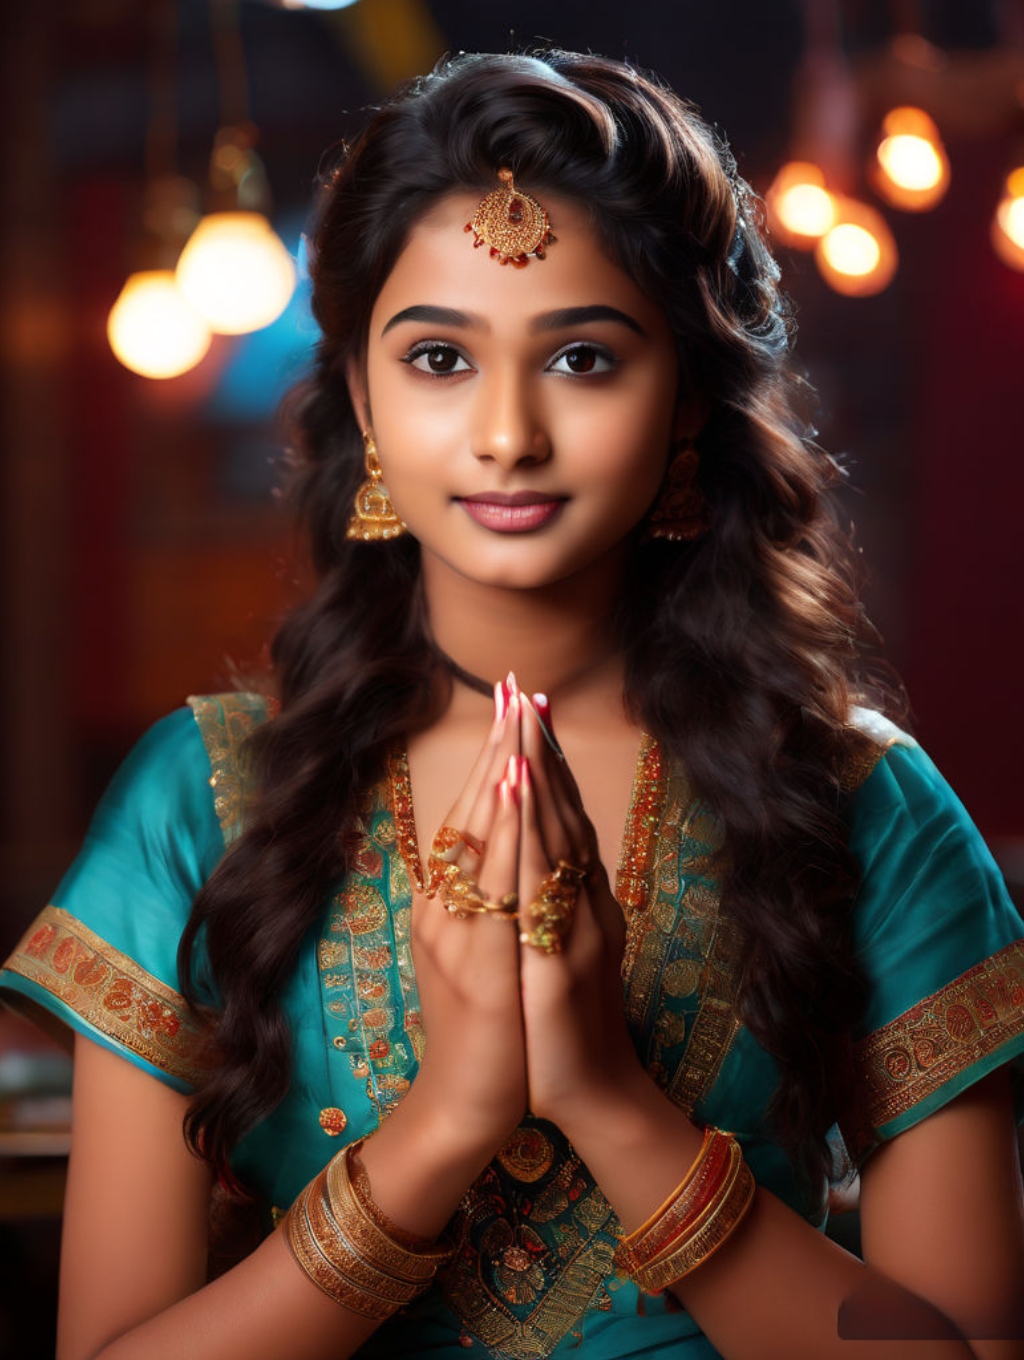 Indian Girl: Custom Frames & Portrait Photography-Theme:3